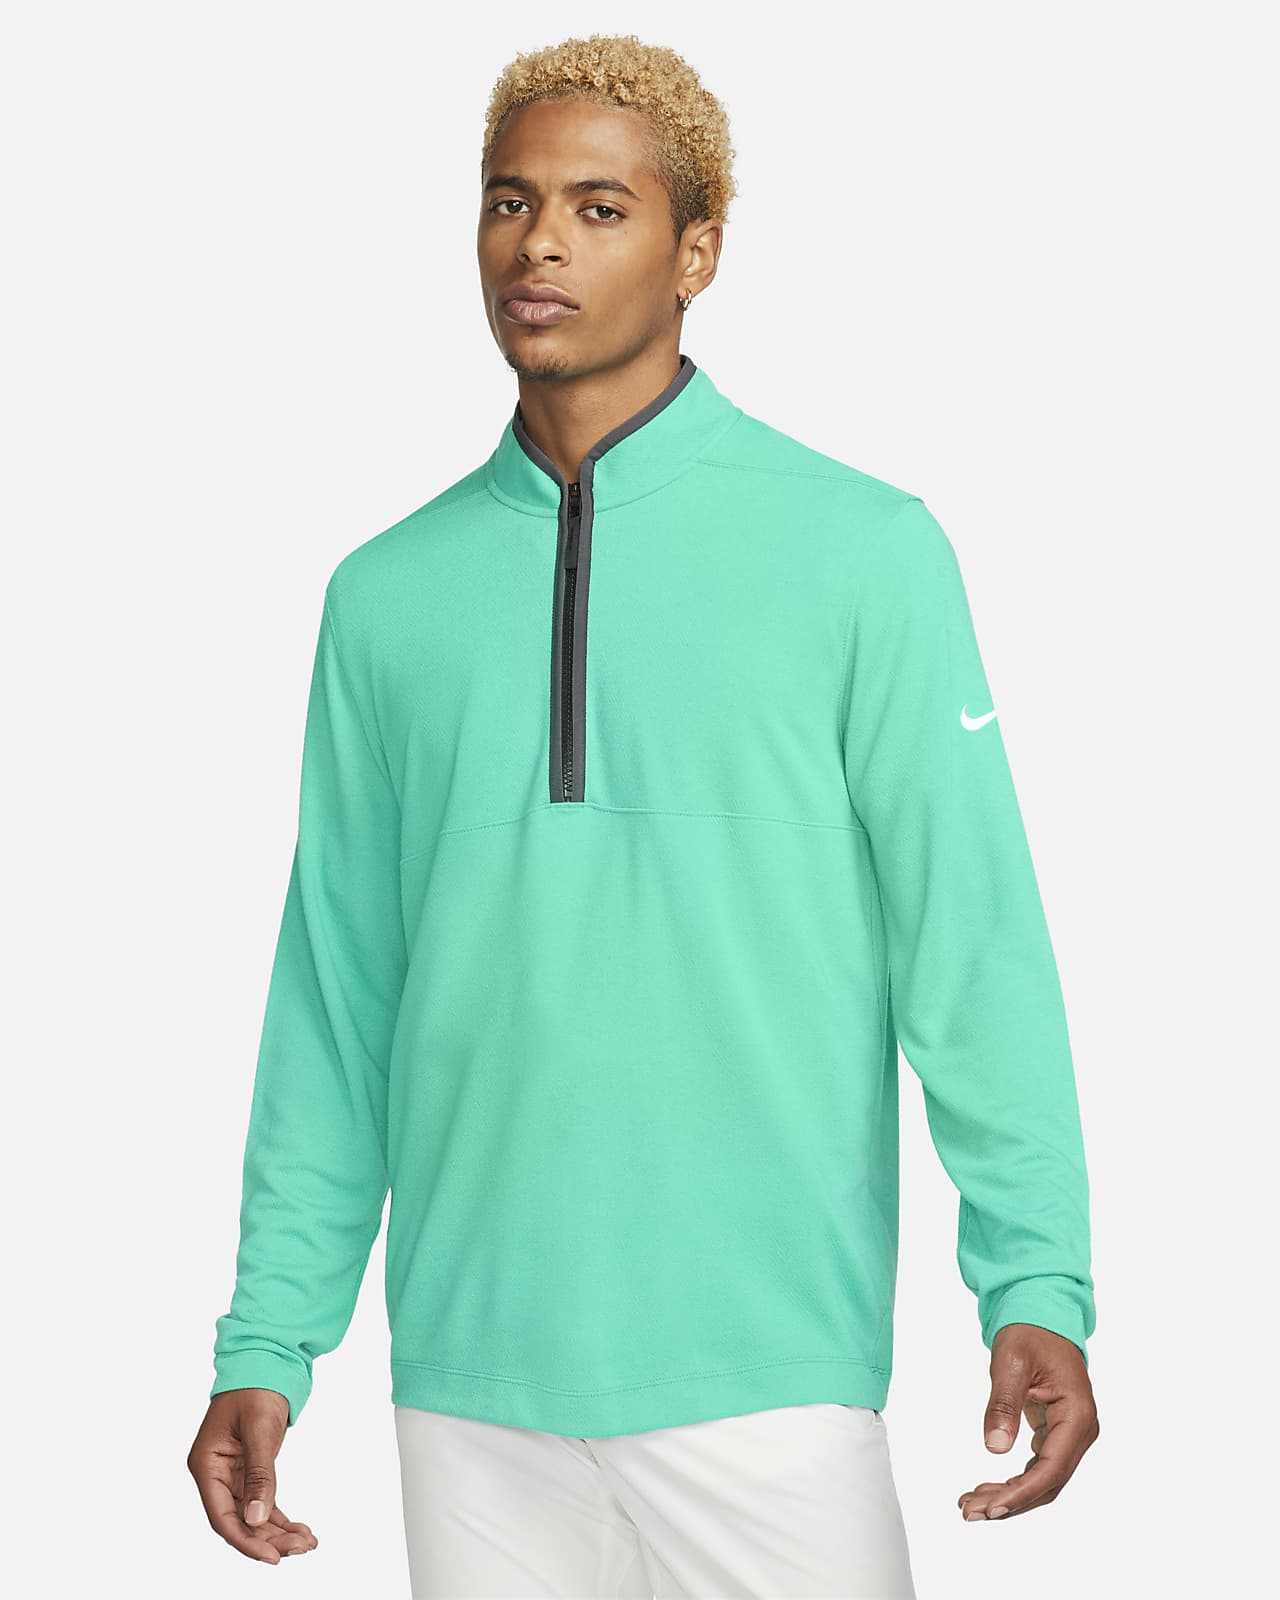 Nike Dri-FIT Victory Men's Half-Zip Golf Top.